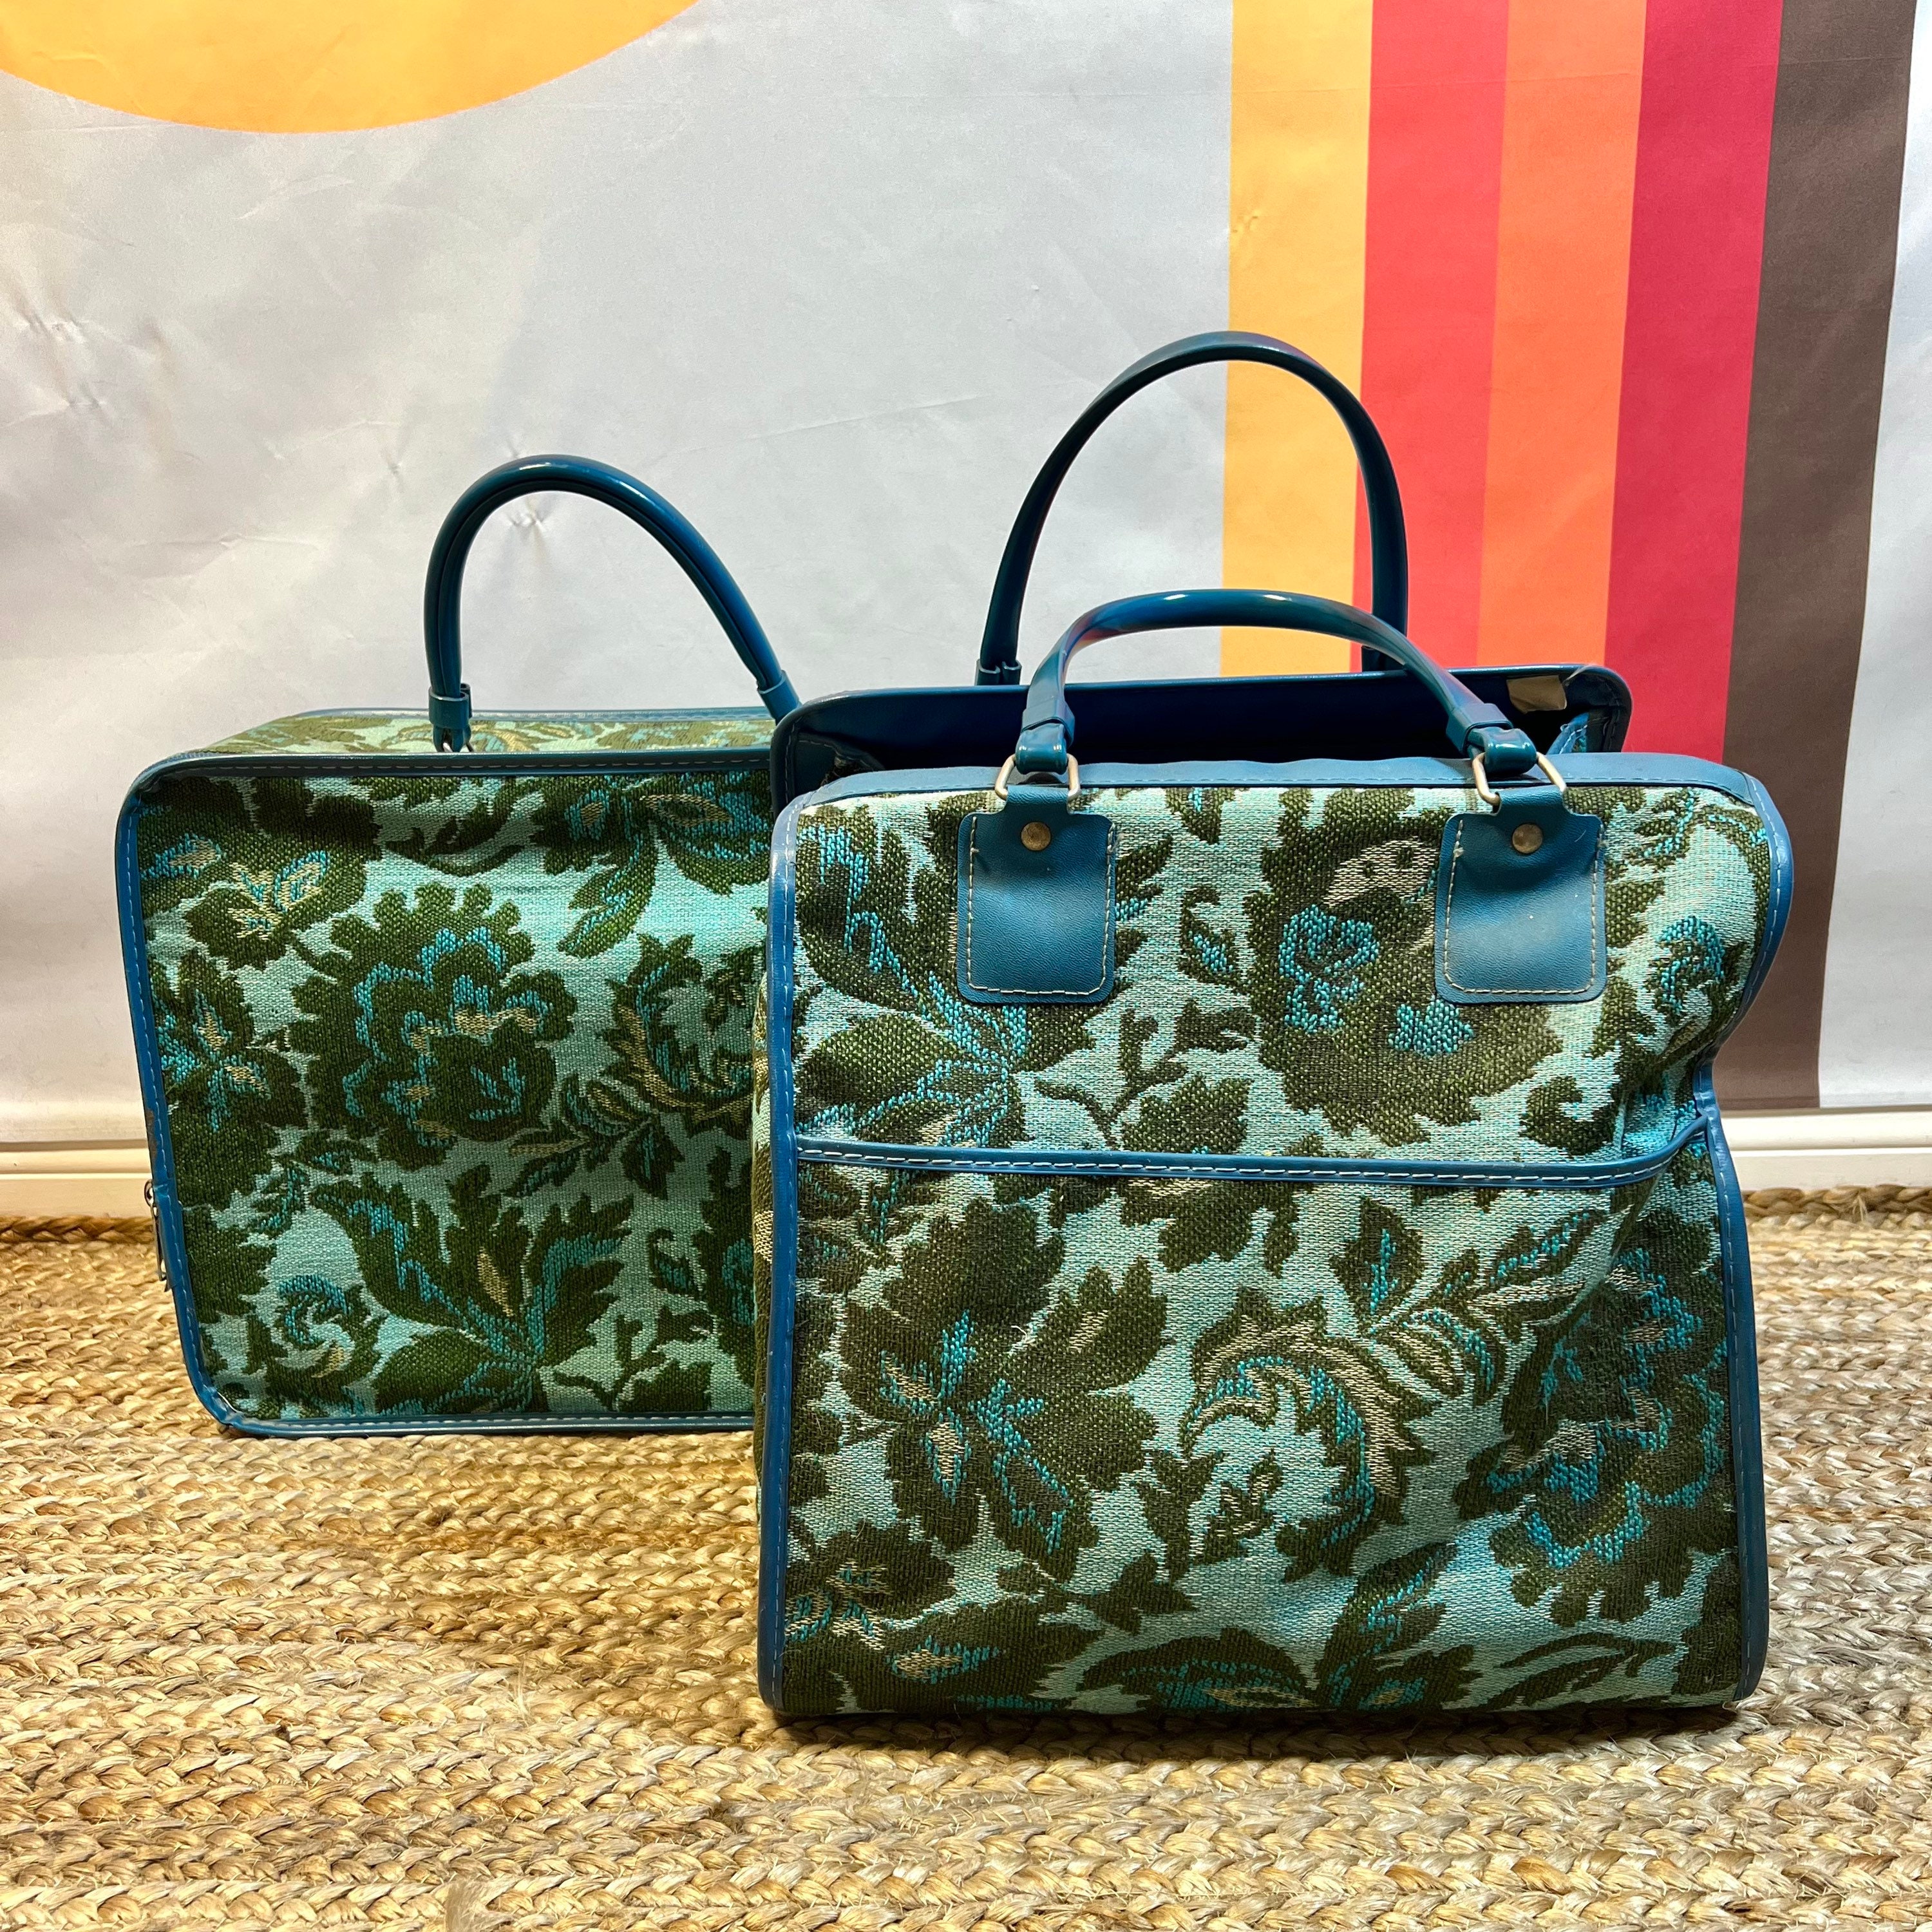 Hobo Bags for sale in Avon Park, Florida | Facebook Marketplace | Facebook